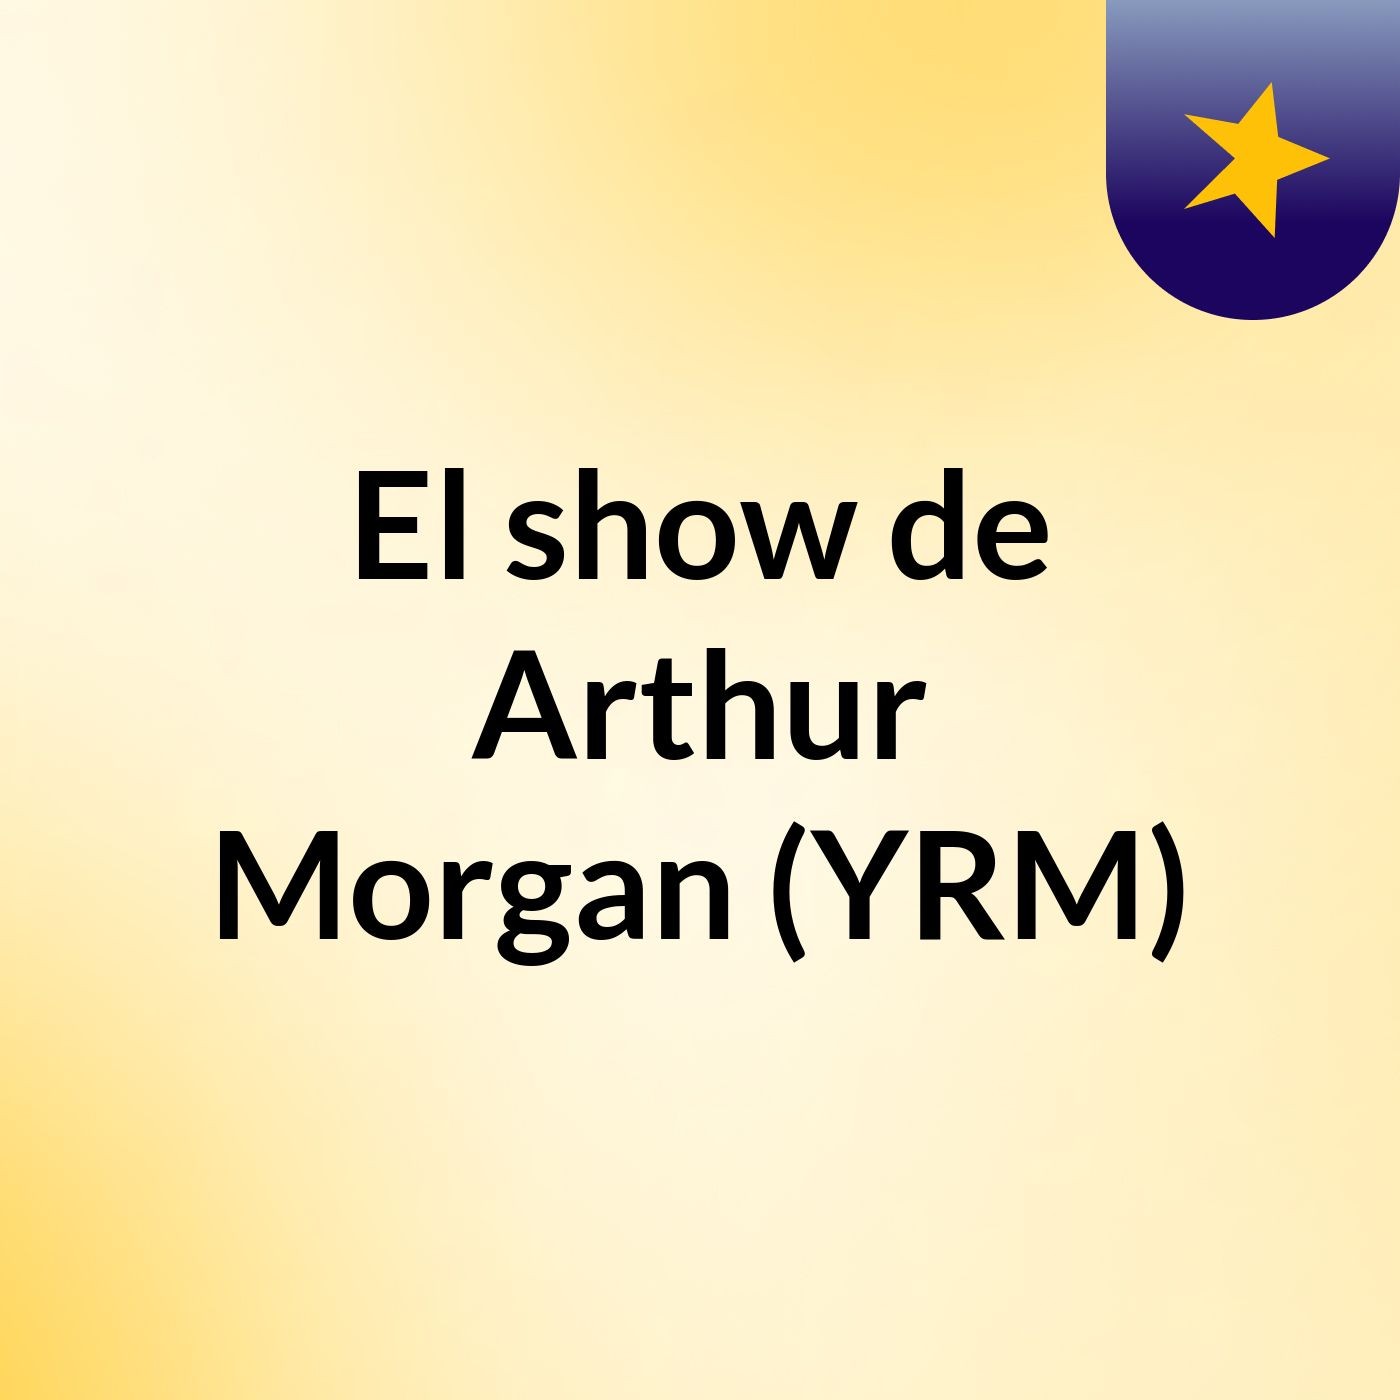 El show de Arthur Morgan (YRM)